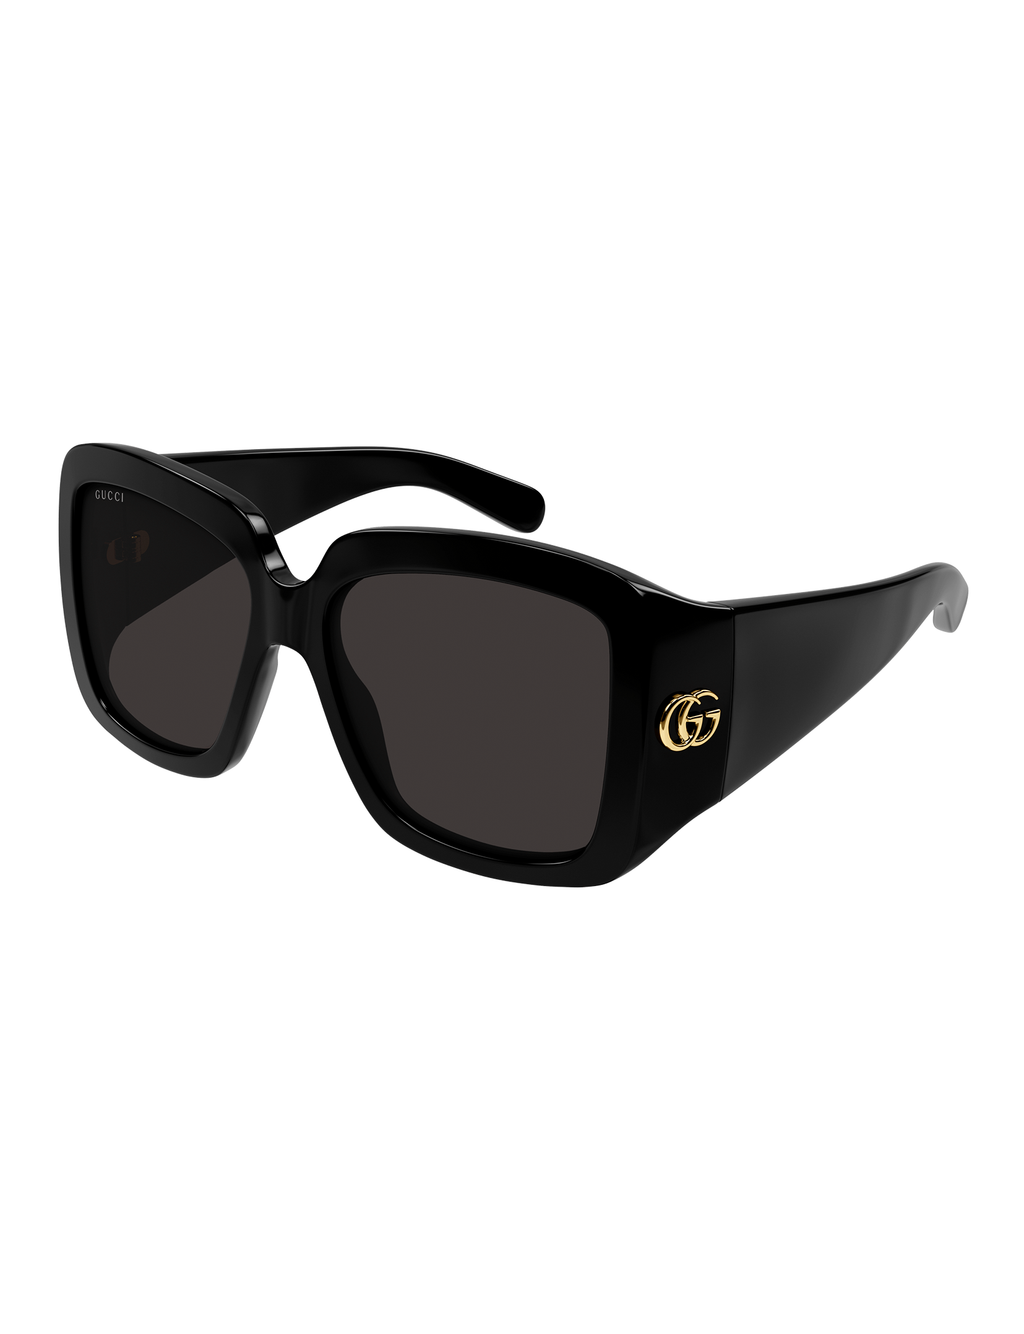 Corner Logo Sunglasses, Black/Grey